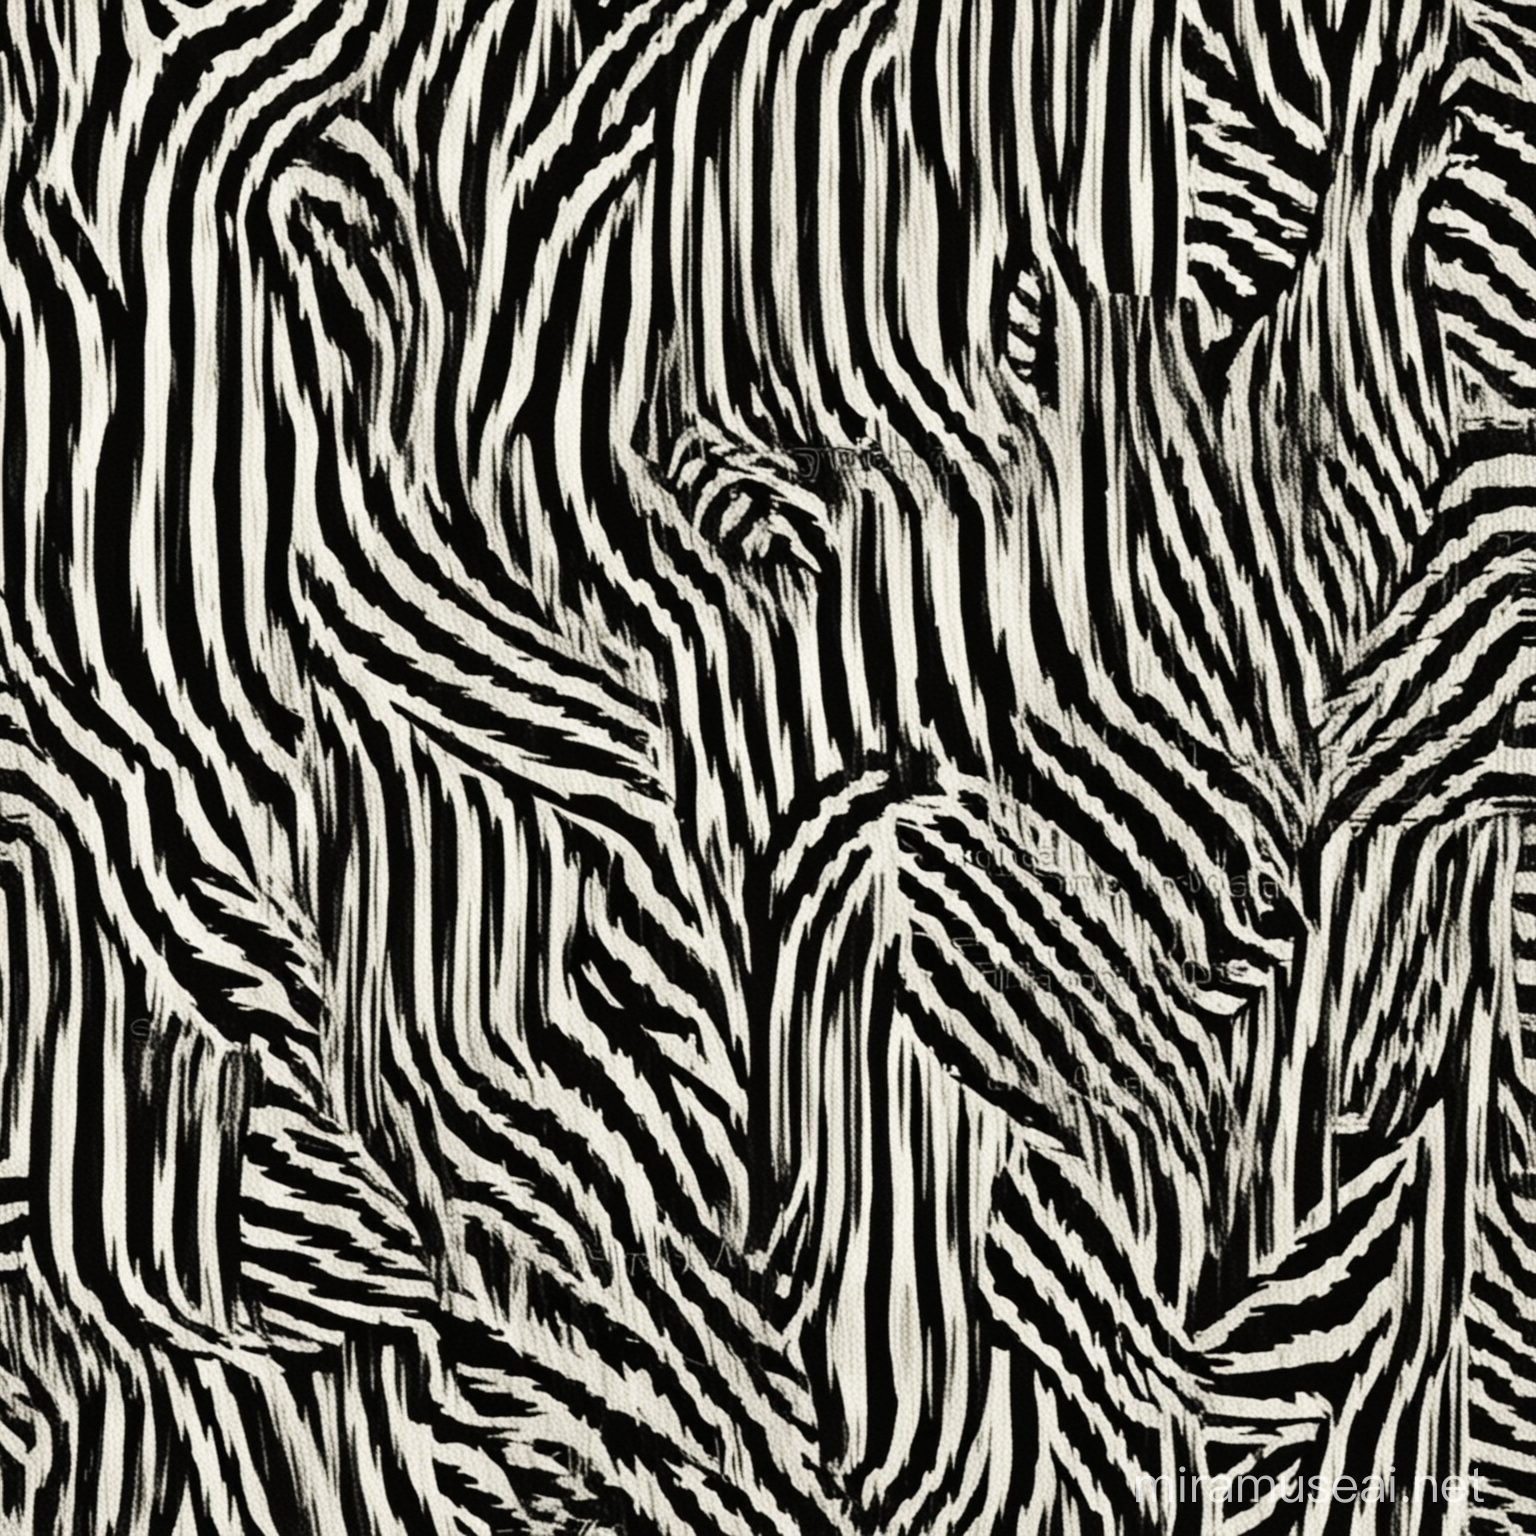 Monochrome AfricanInspired Zebra Print Textile Designs